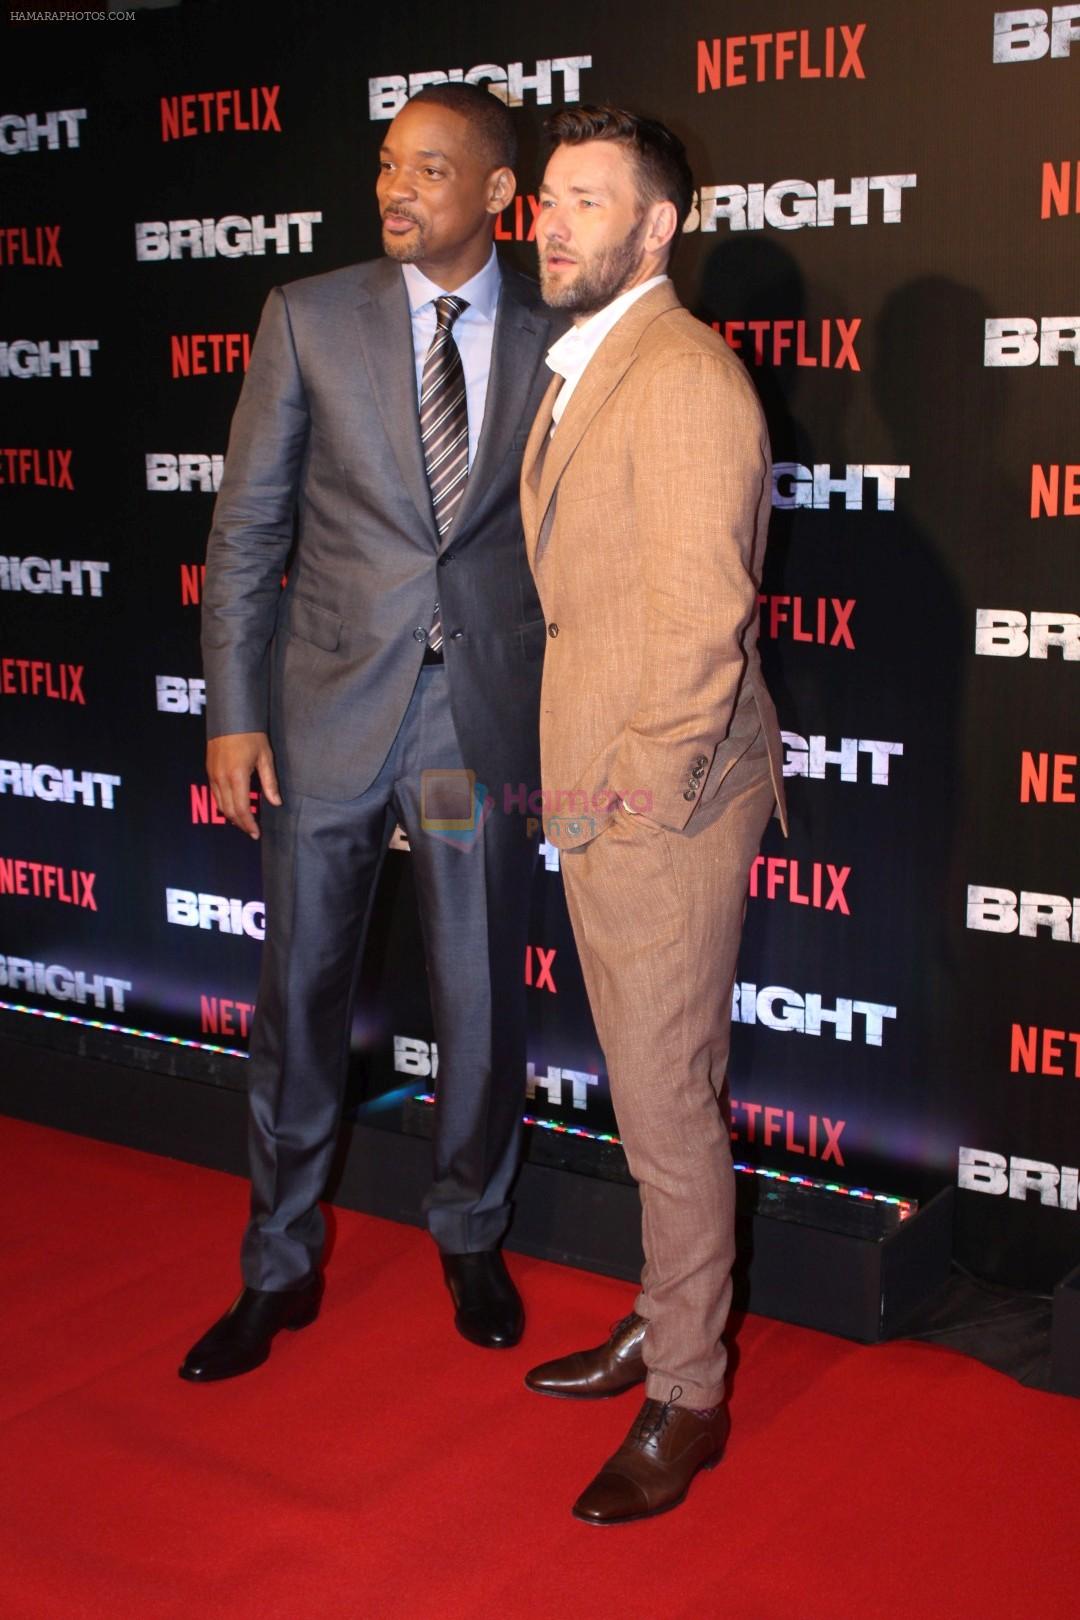 Joel Edgerton, Will Smith At the Red Carpet Of Netflix Original Bright on 18th Dec 2017